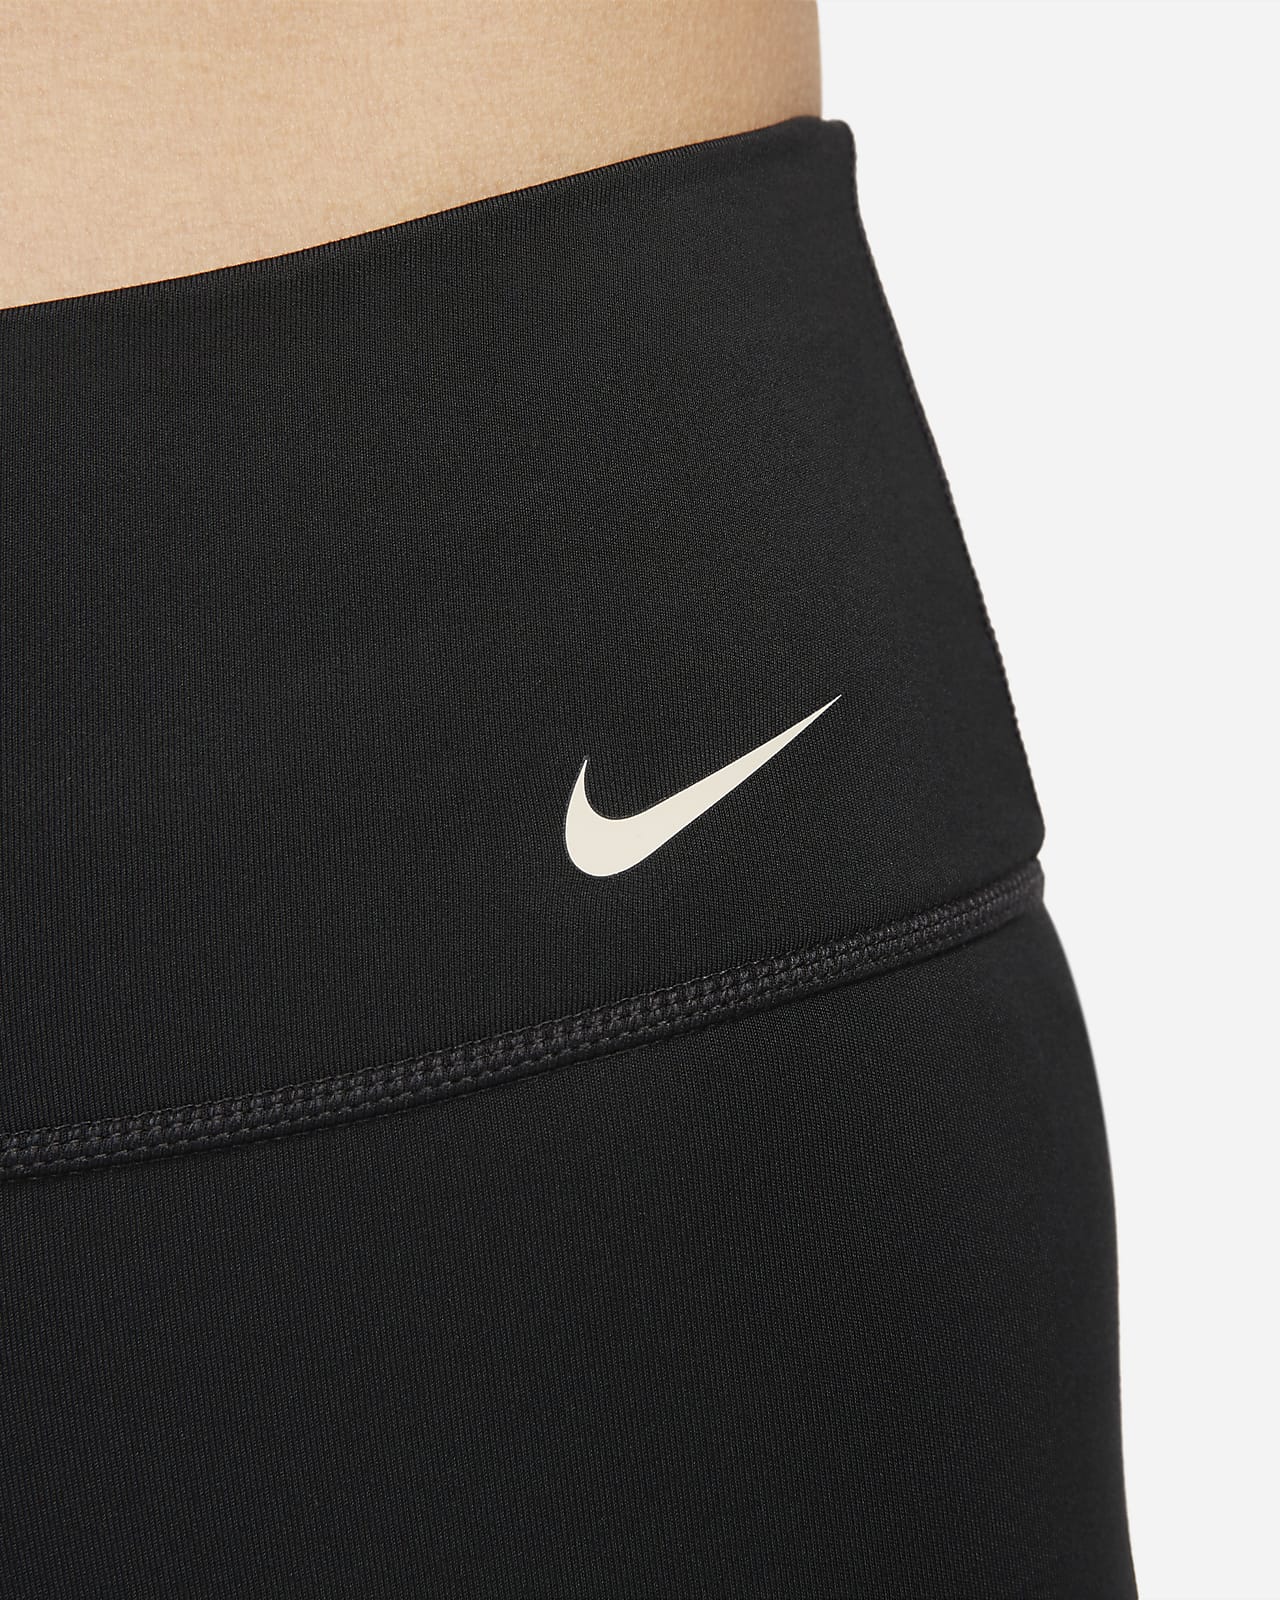 Mallas largas Nike One para Mujeres - DD4559